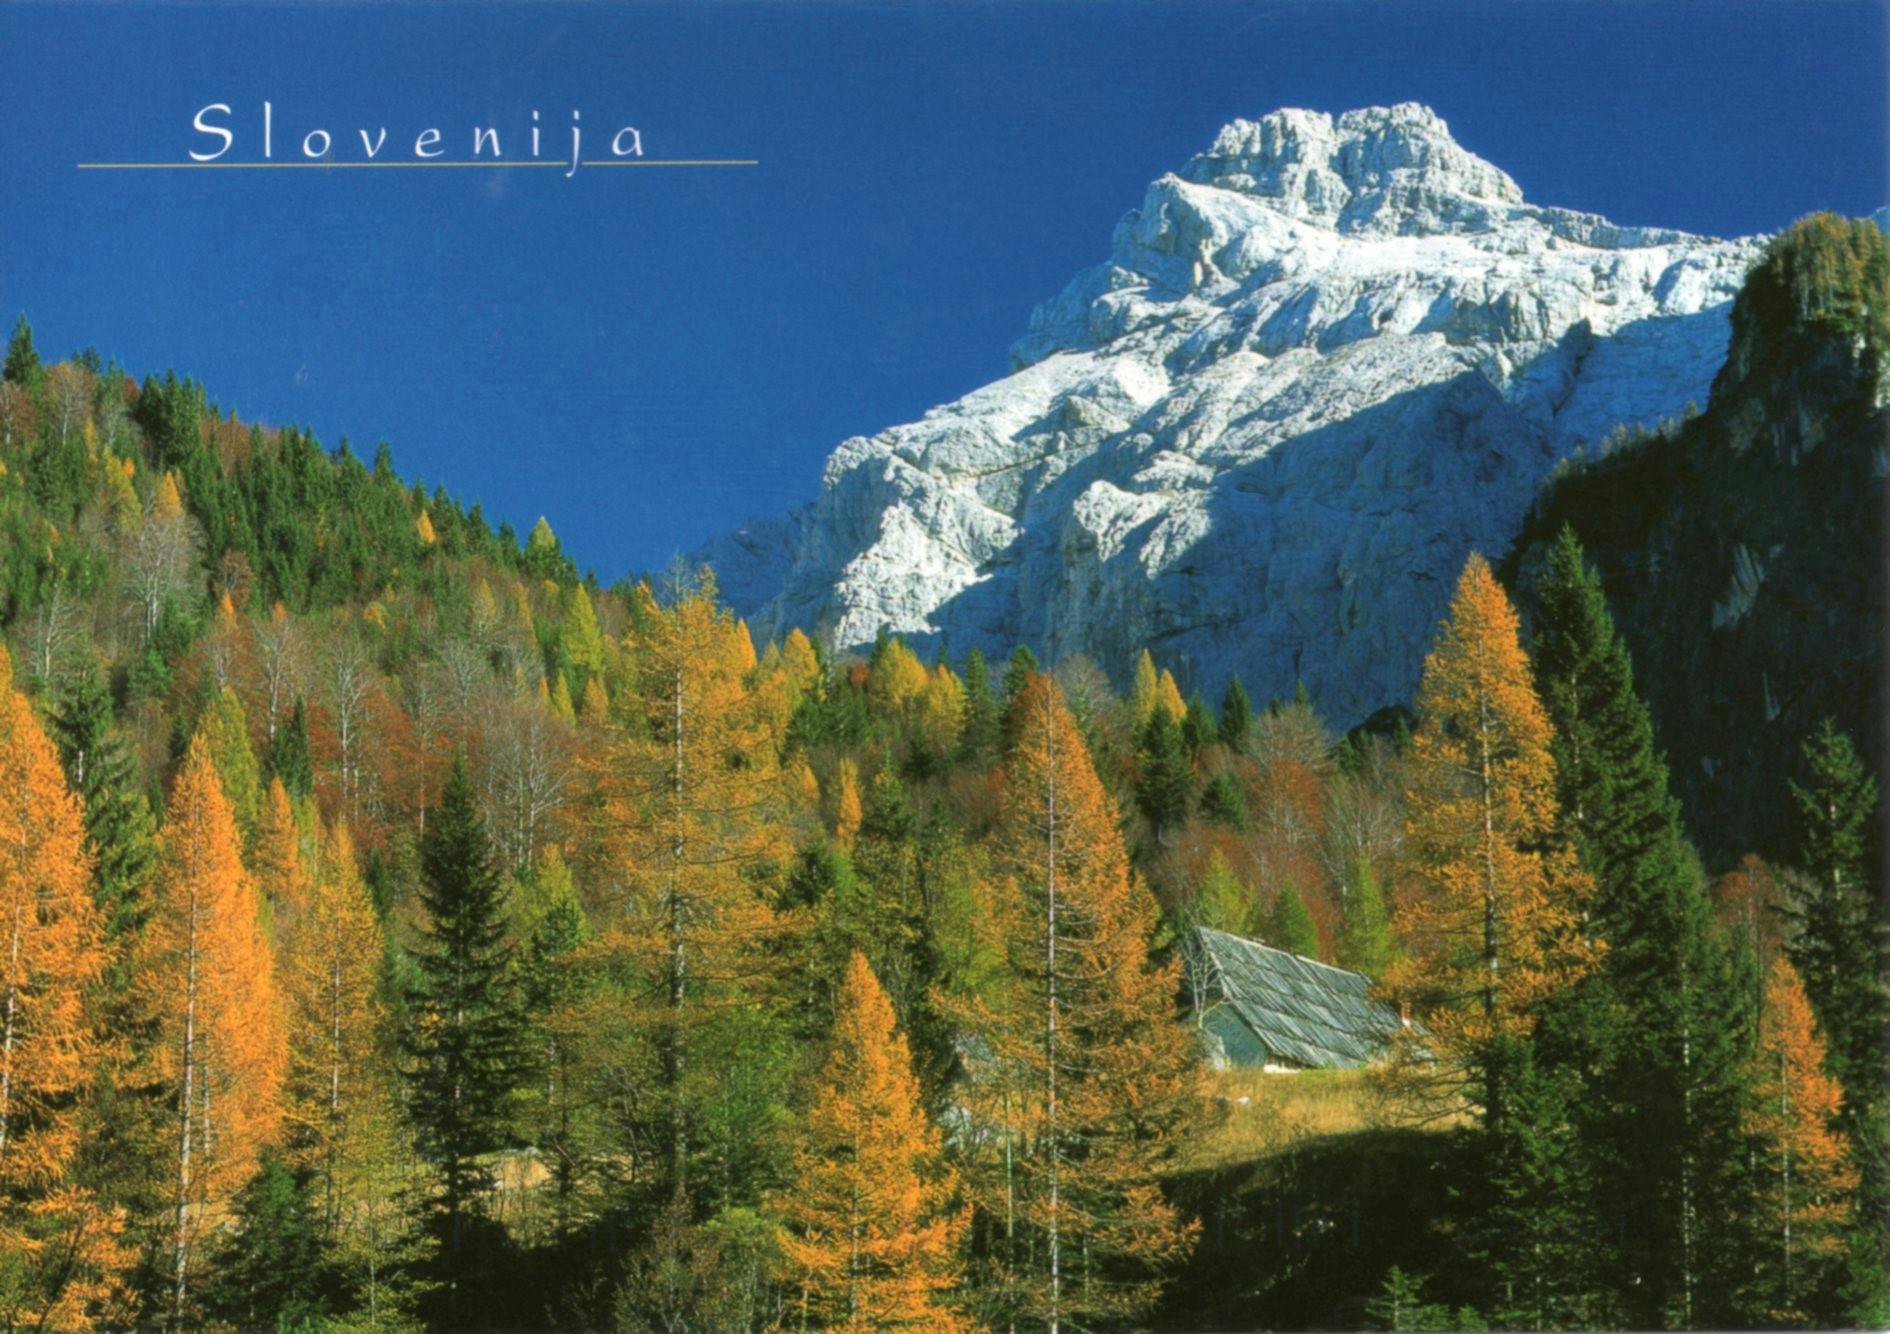 Slovenia card front 3